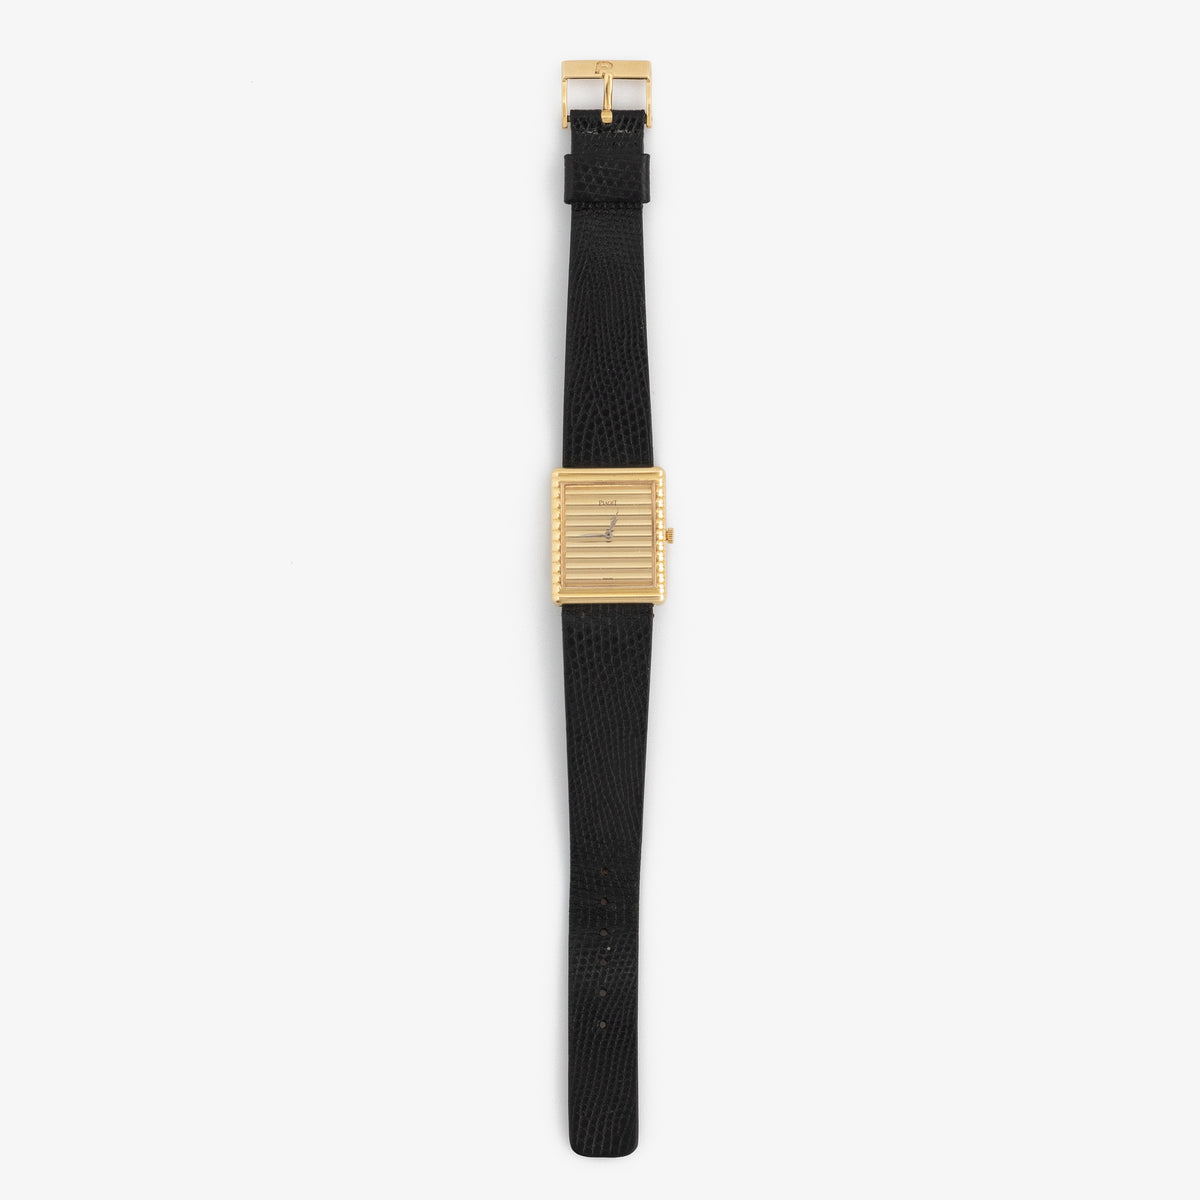 Piaget Polo 18Kt Gold Watch – Aimé Leon Dore